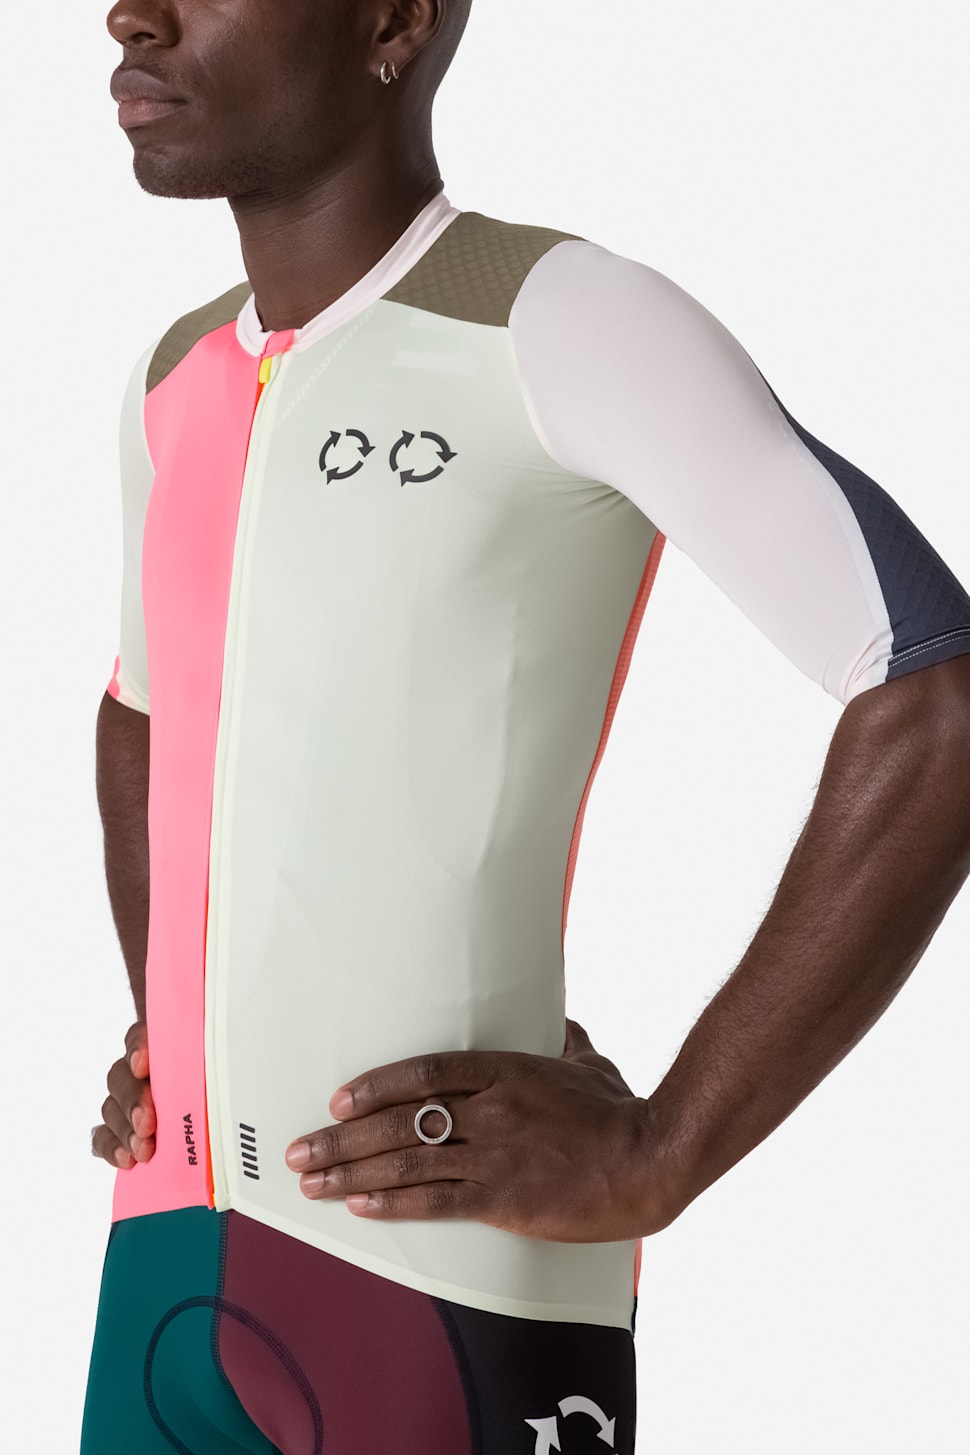 Rapha - Men's Pro Team Aero Cycling Jersey - Black - Large